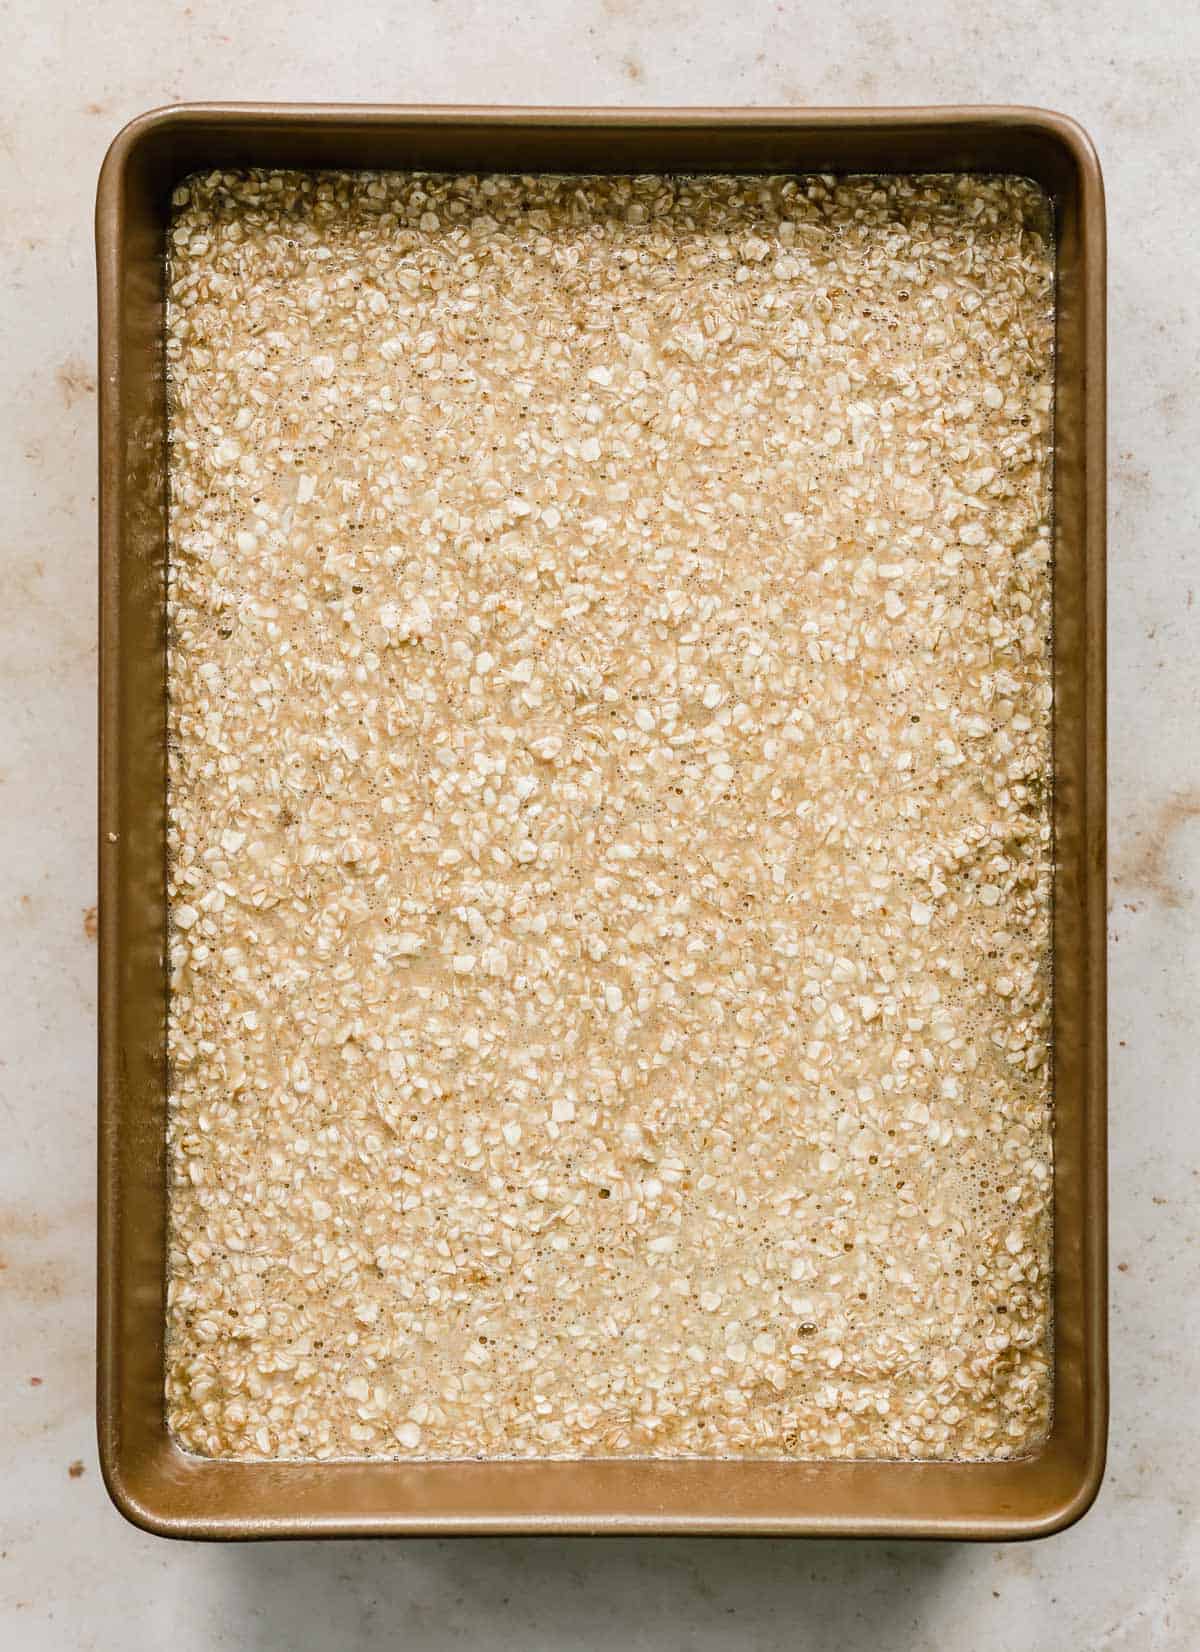 A bronze rectangular baking dish full of oatmeal cake batter.